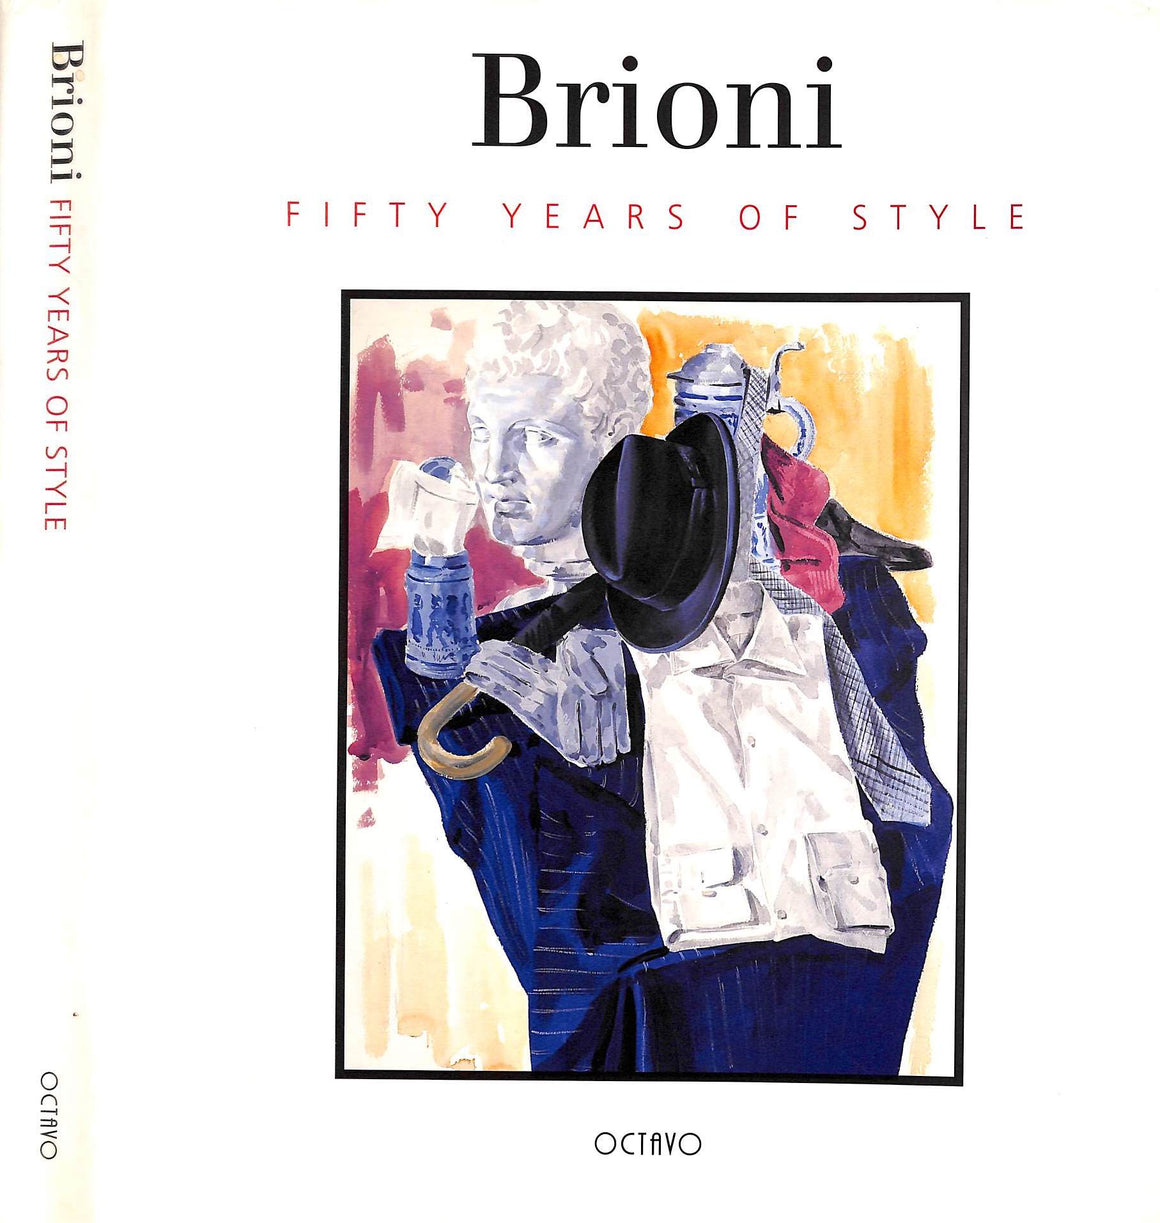 "Brioni: Fifty Years Of Style" 1995 GIORGETTI, Cristina